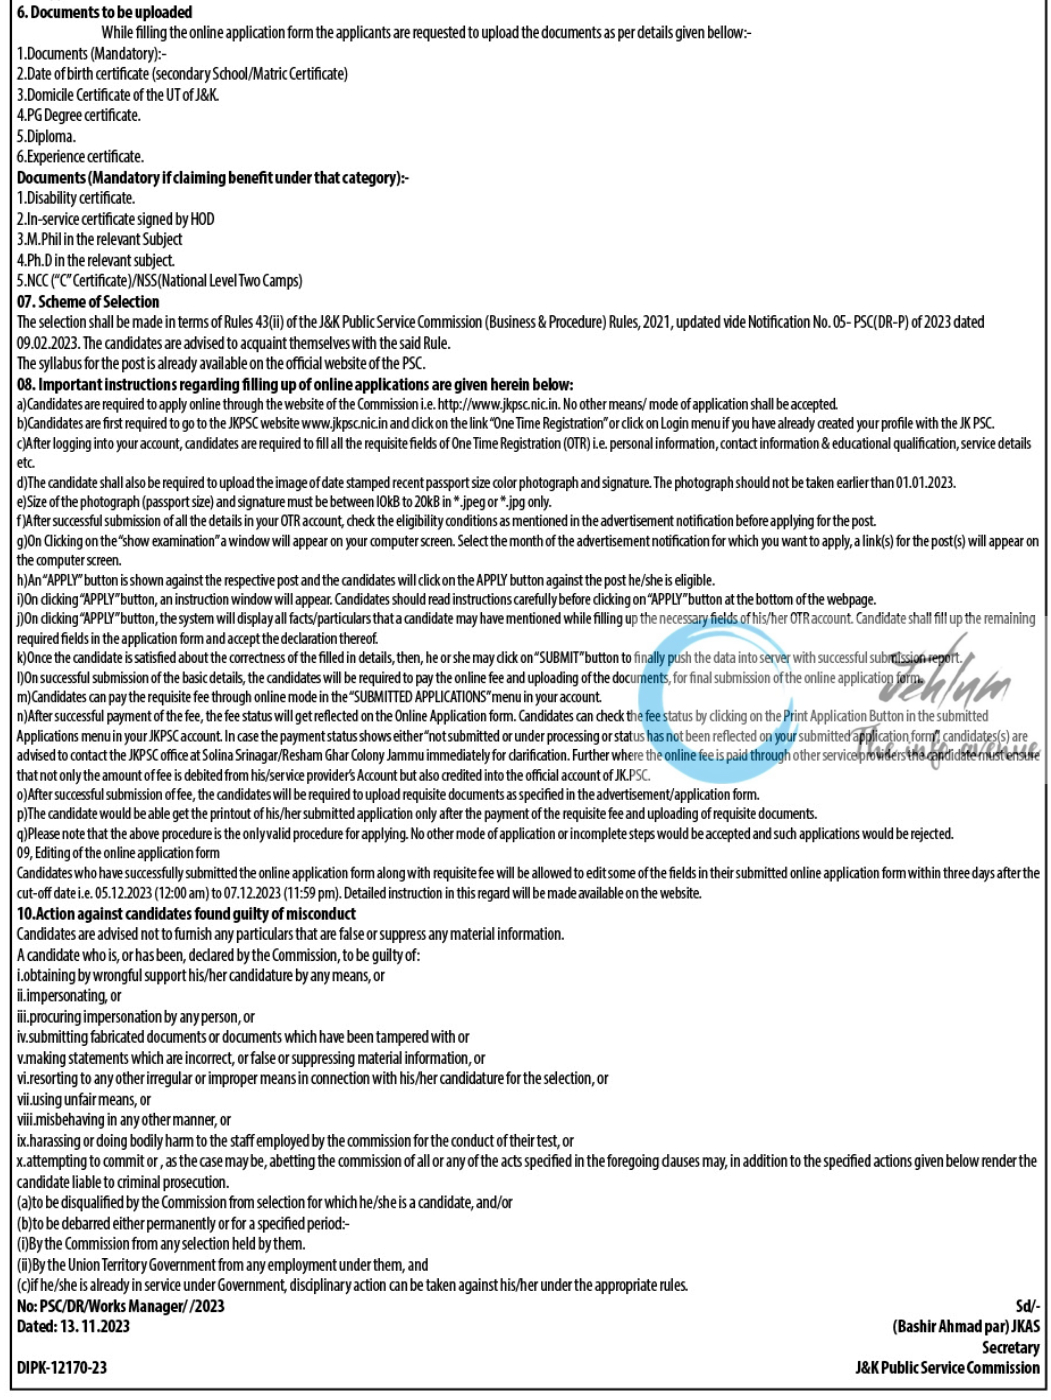 JKPSC Transport Department Works Manager Jobs Advertisement No 43-PSC of 2023